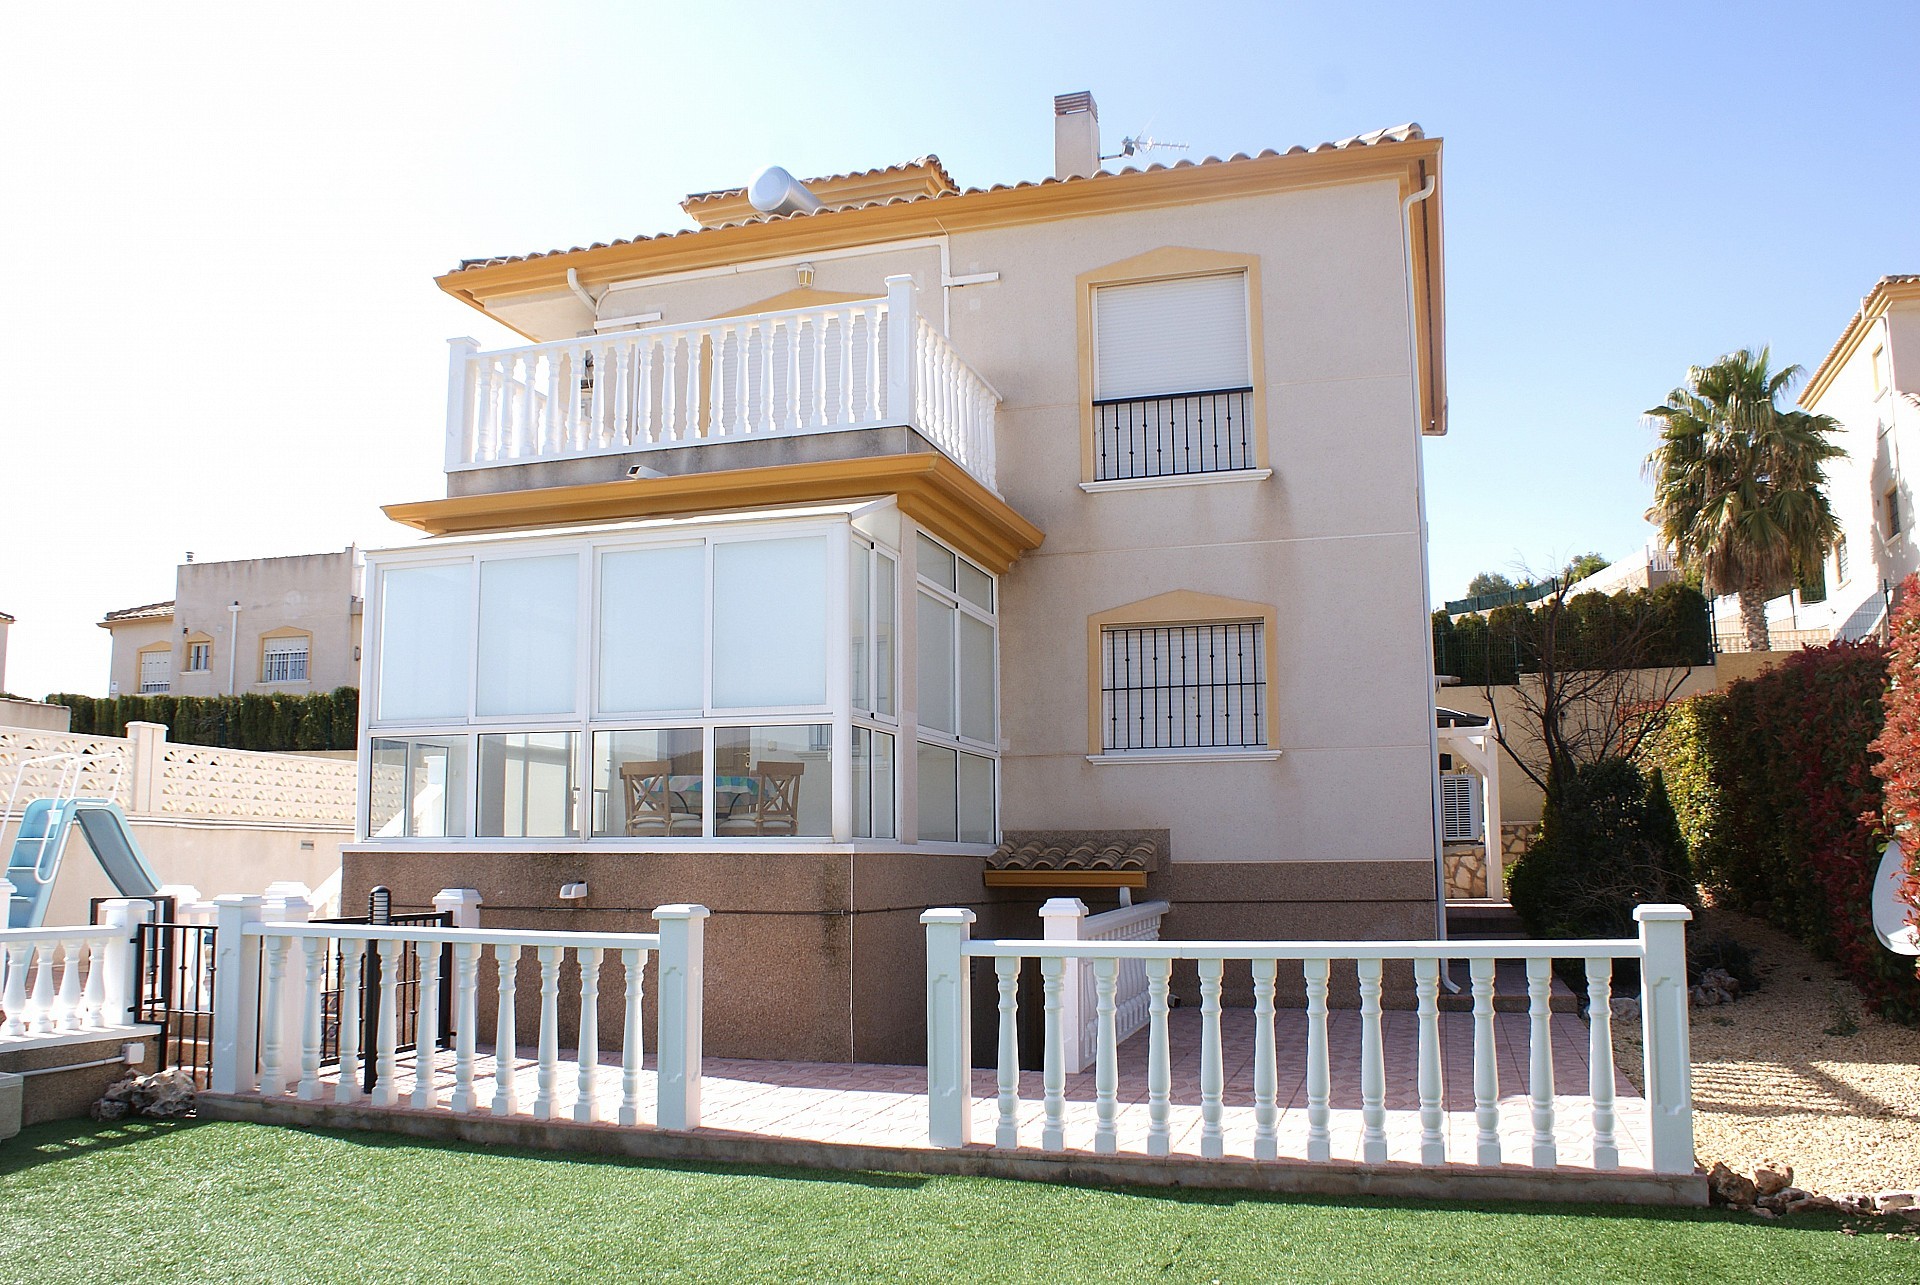 For sale: 3 bedroom house / villa in Castalla, Costa Blanca